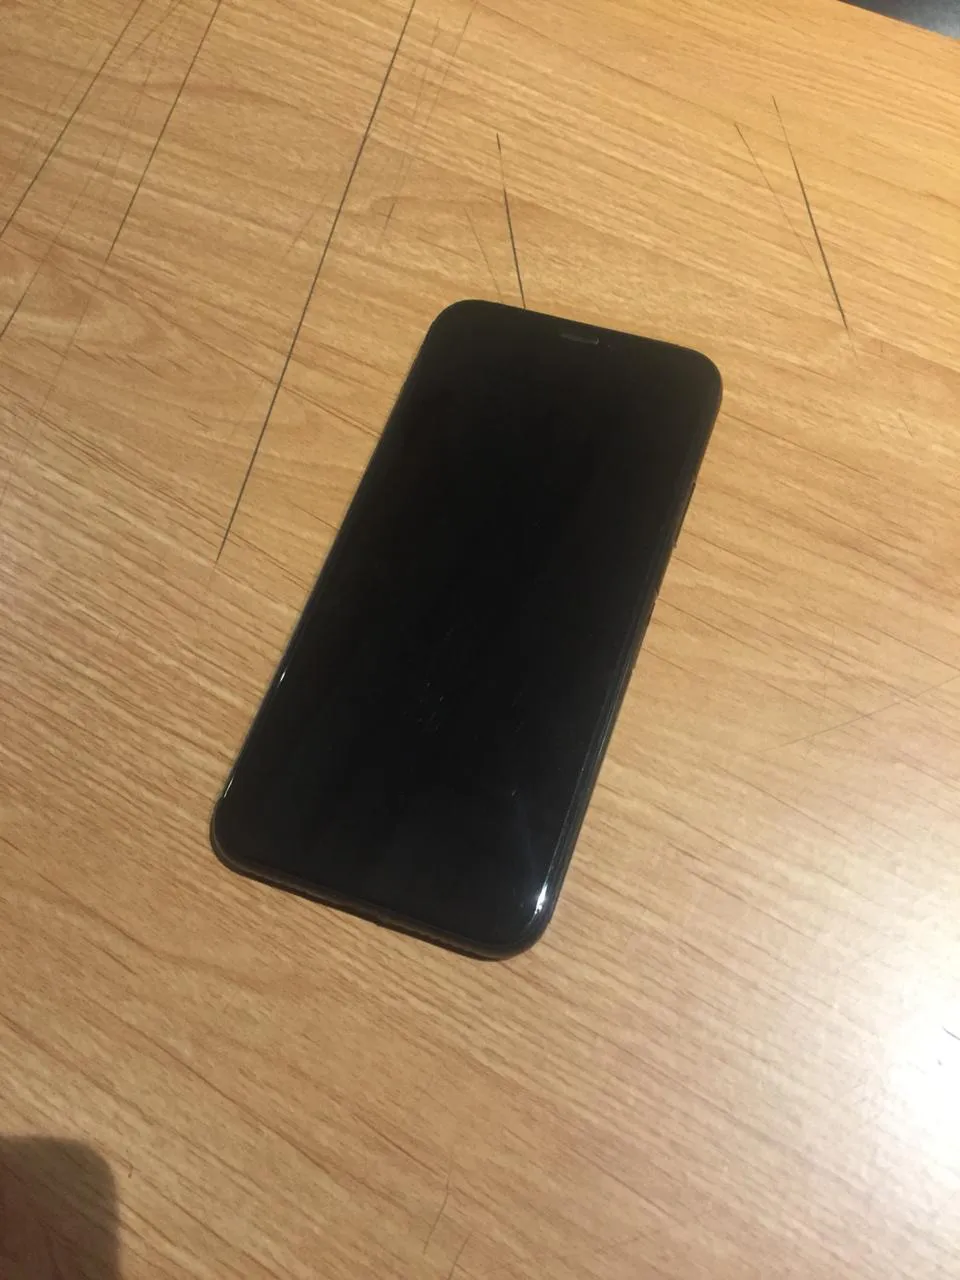 Iphone X 64 GB Black Color - photo 1